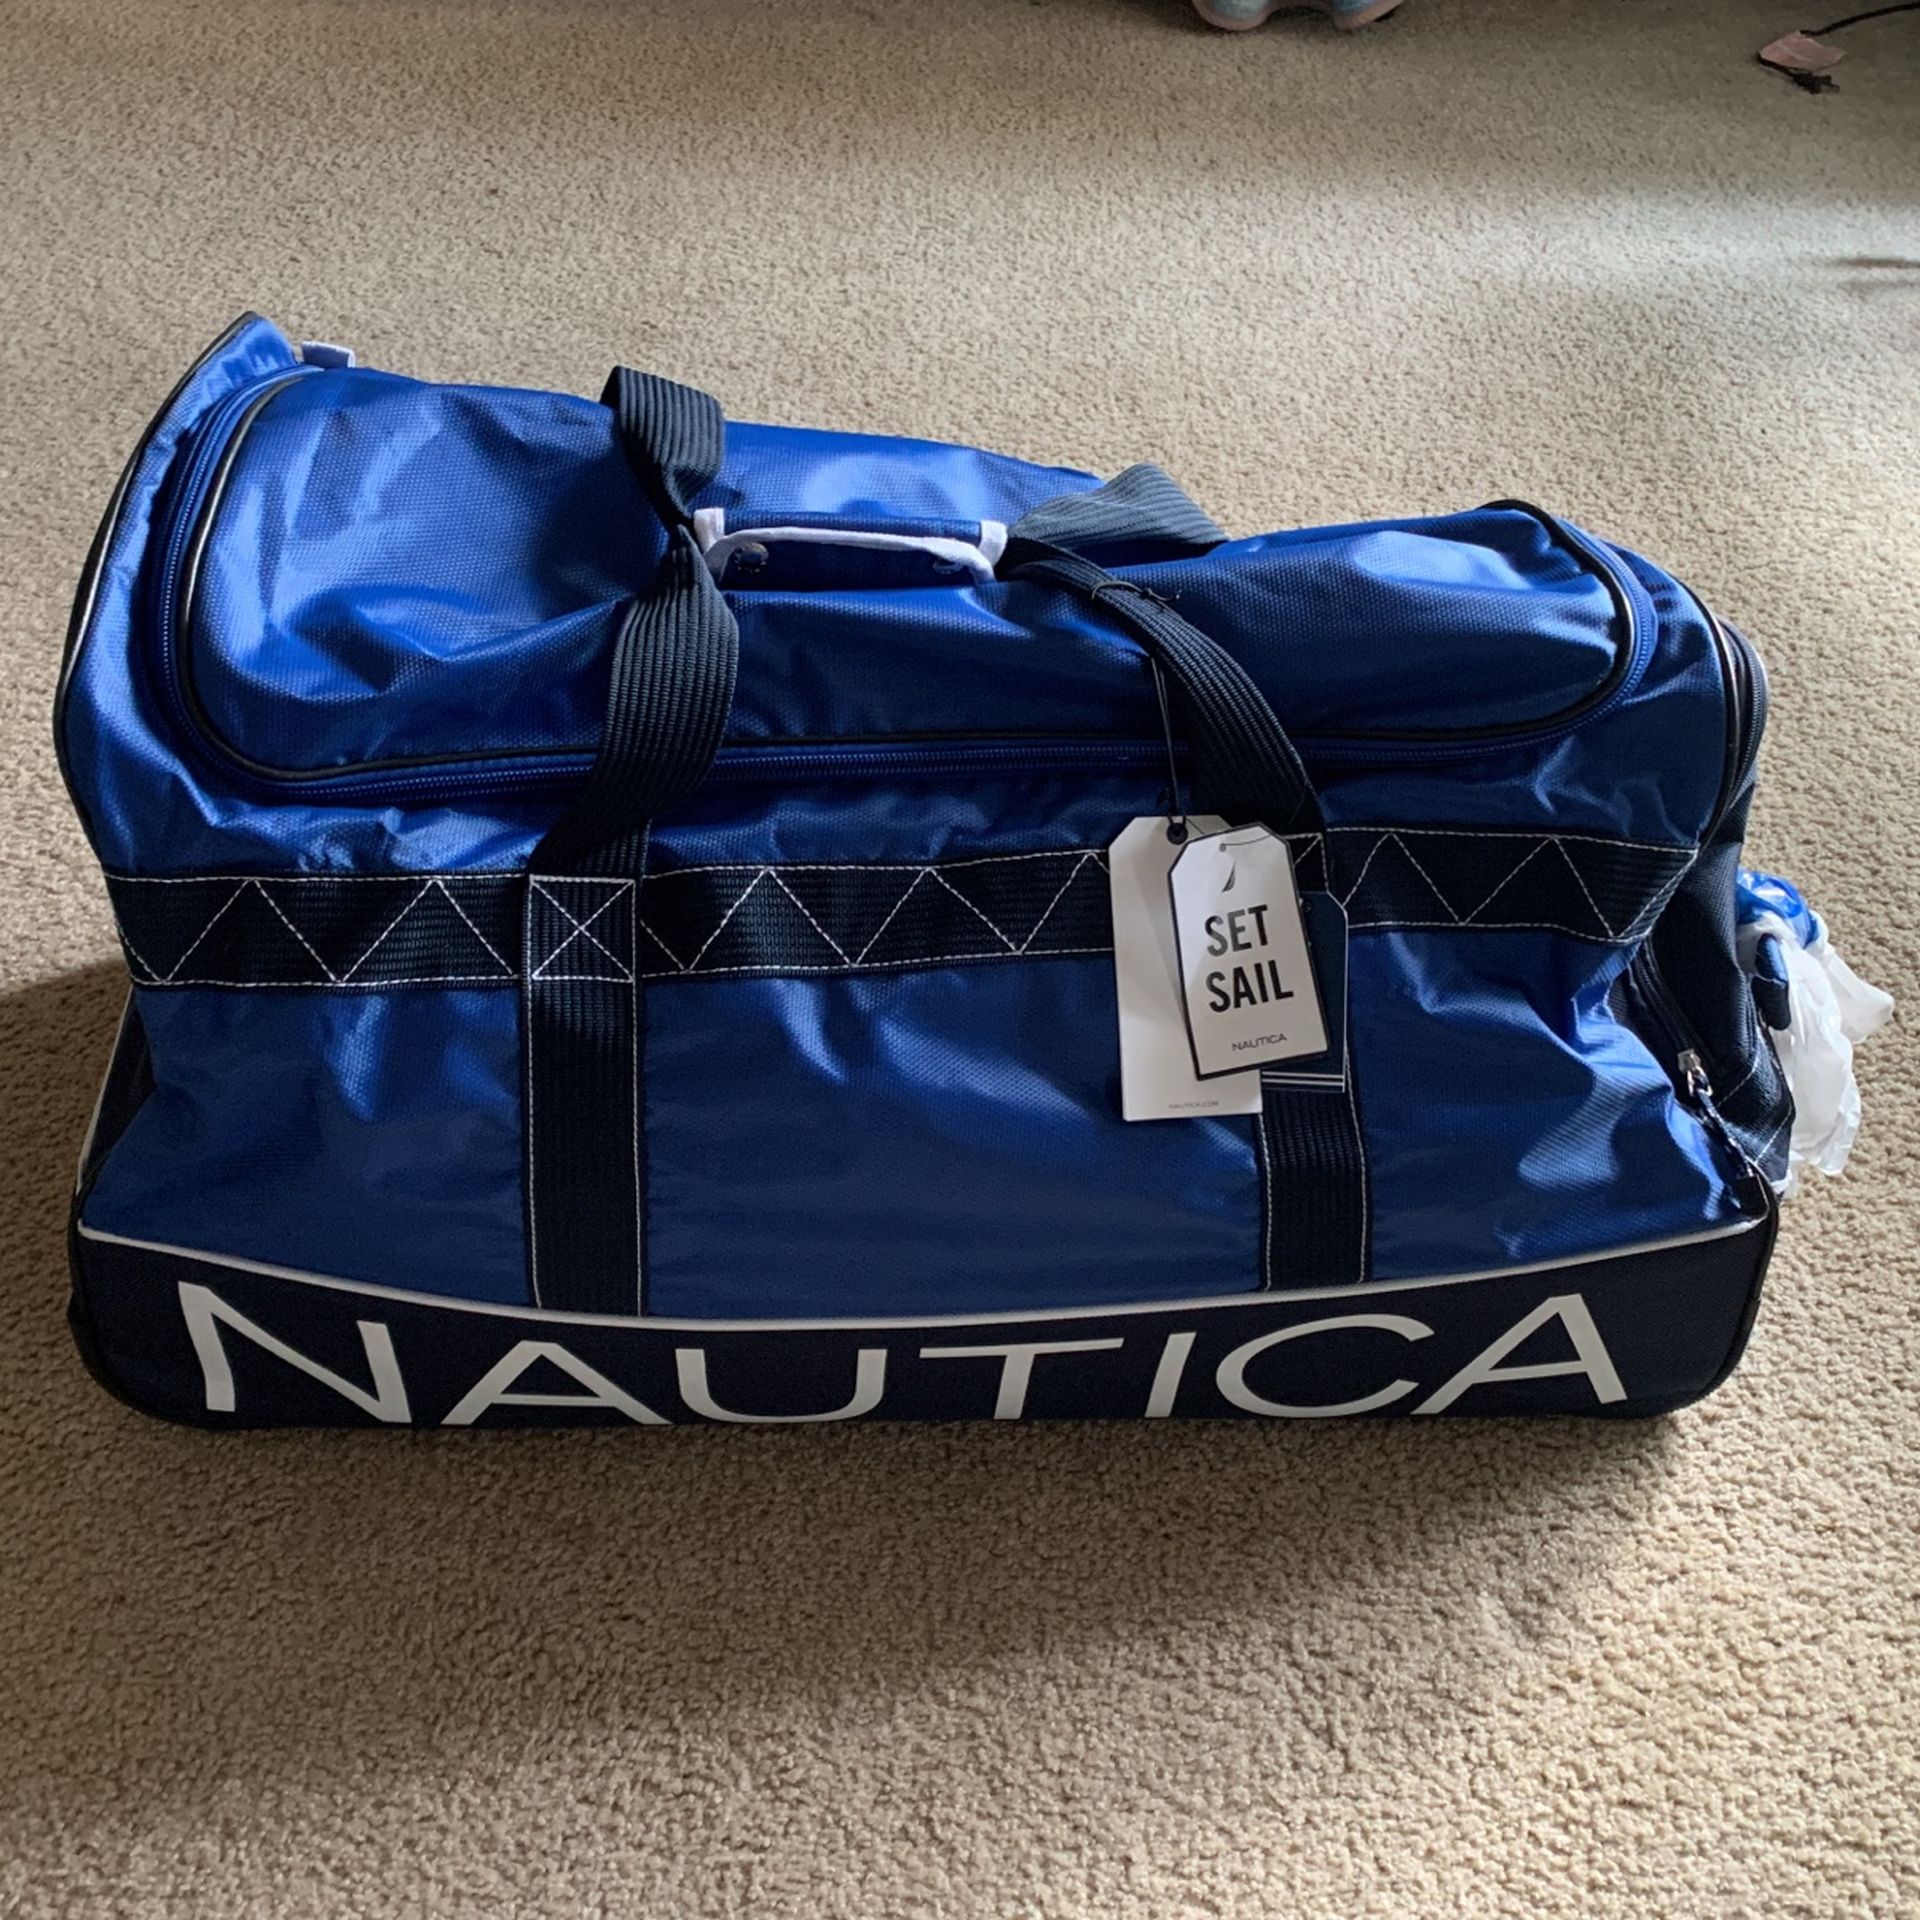 Nautica Duffle Bag w/Wheels